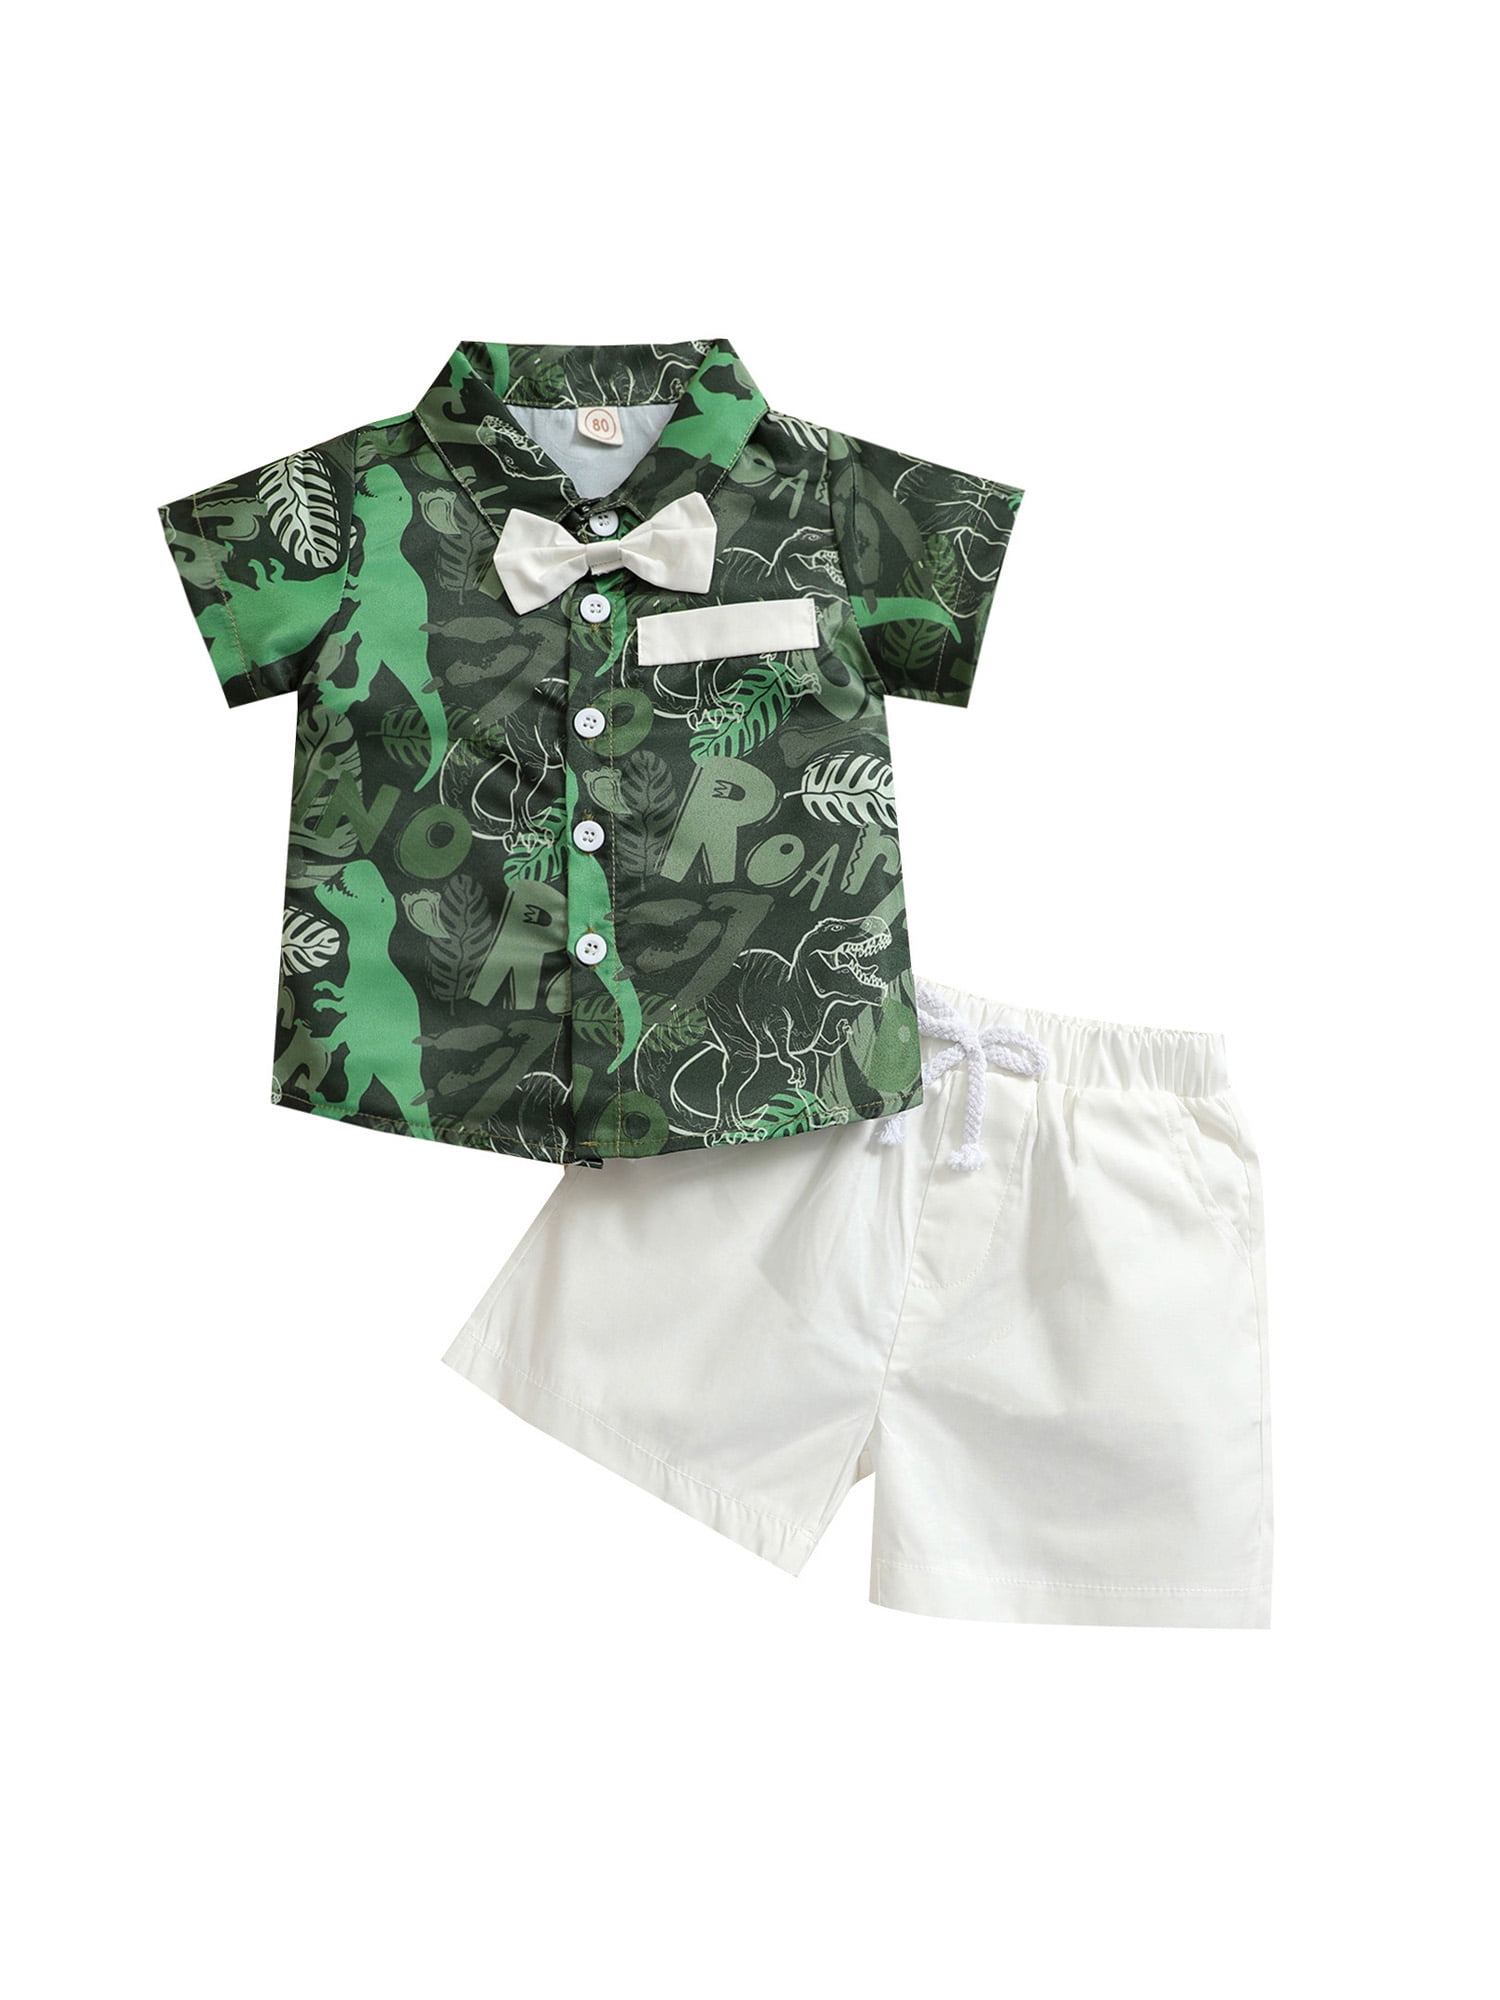 Toddler Boy Shirt Suit Animal Dinosaur Print Short Sleeve Button Shirt Clothes Set Gentleman Clothes Shorts 2 Piece Outfits for Summer 